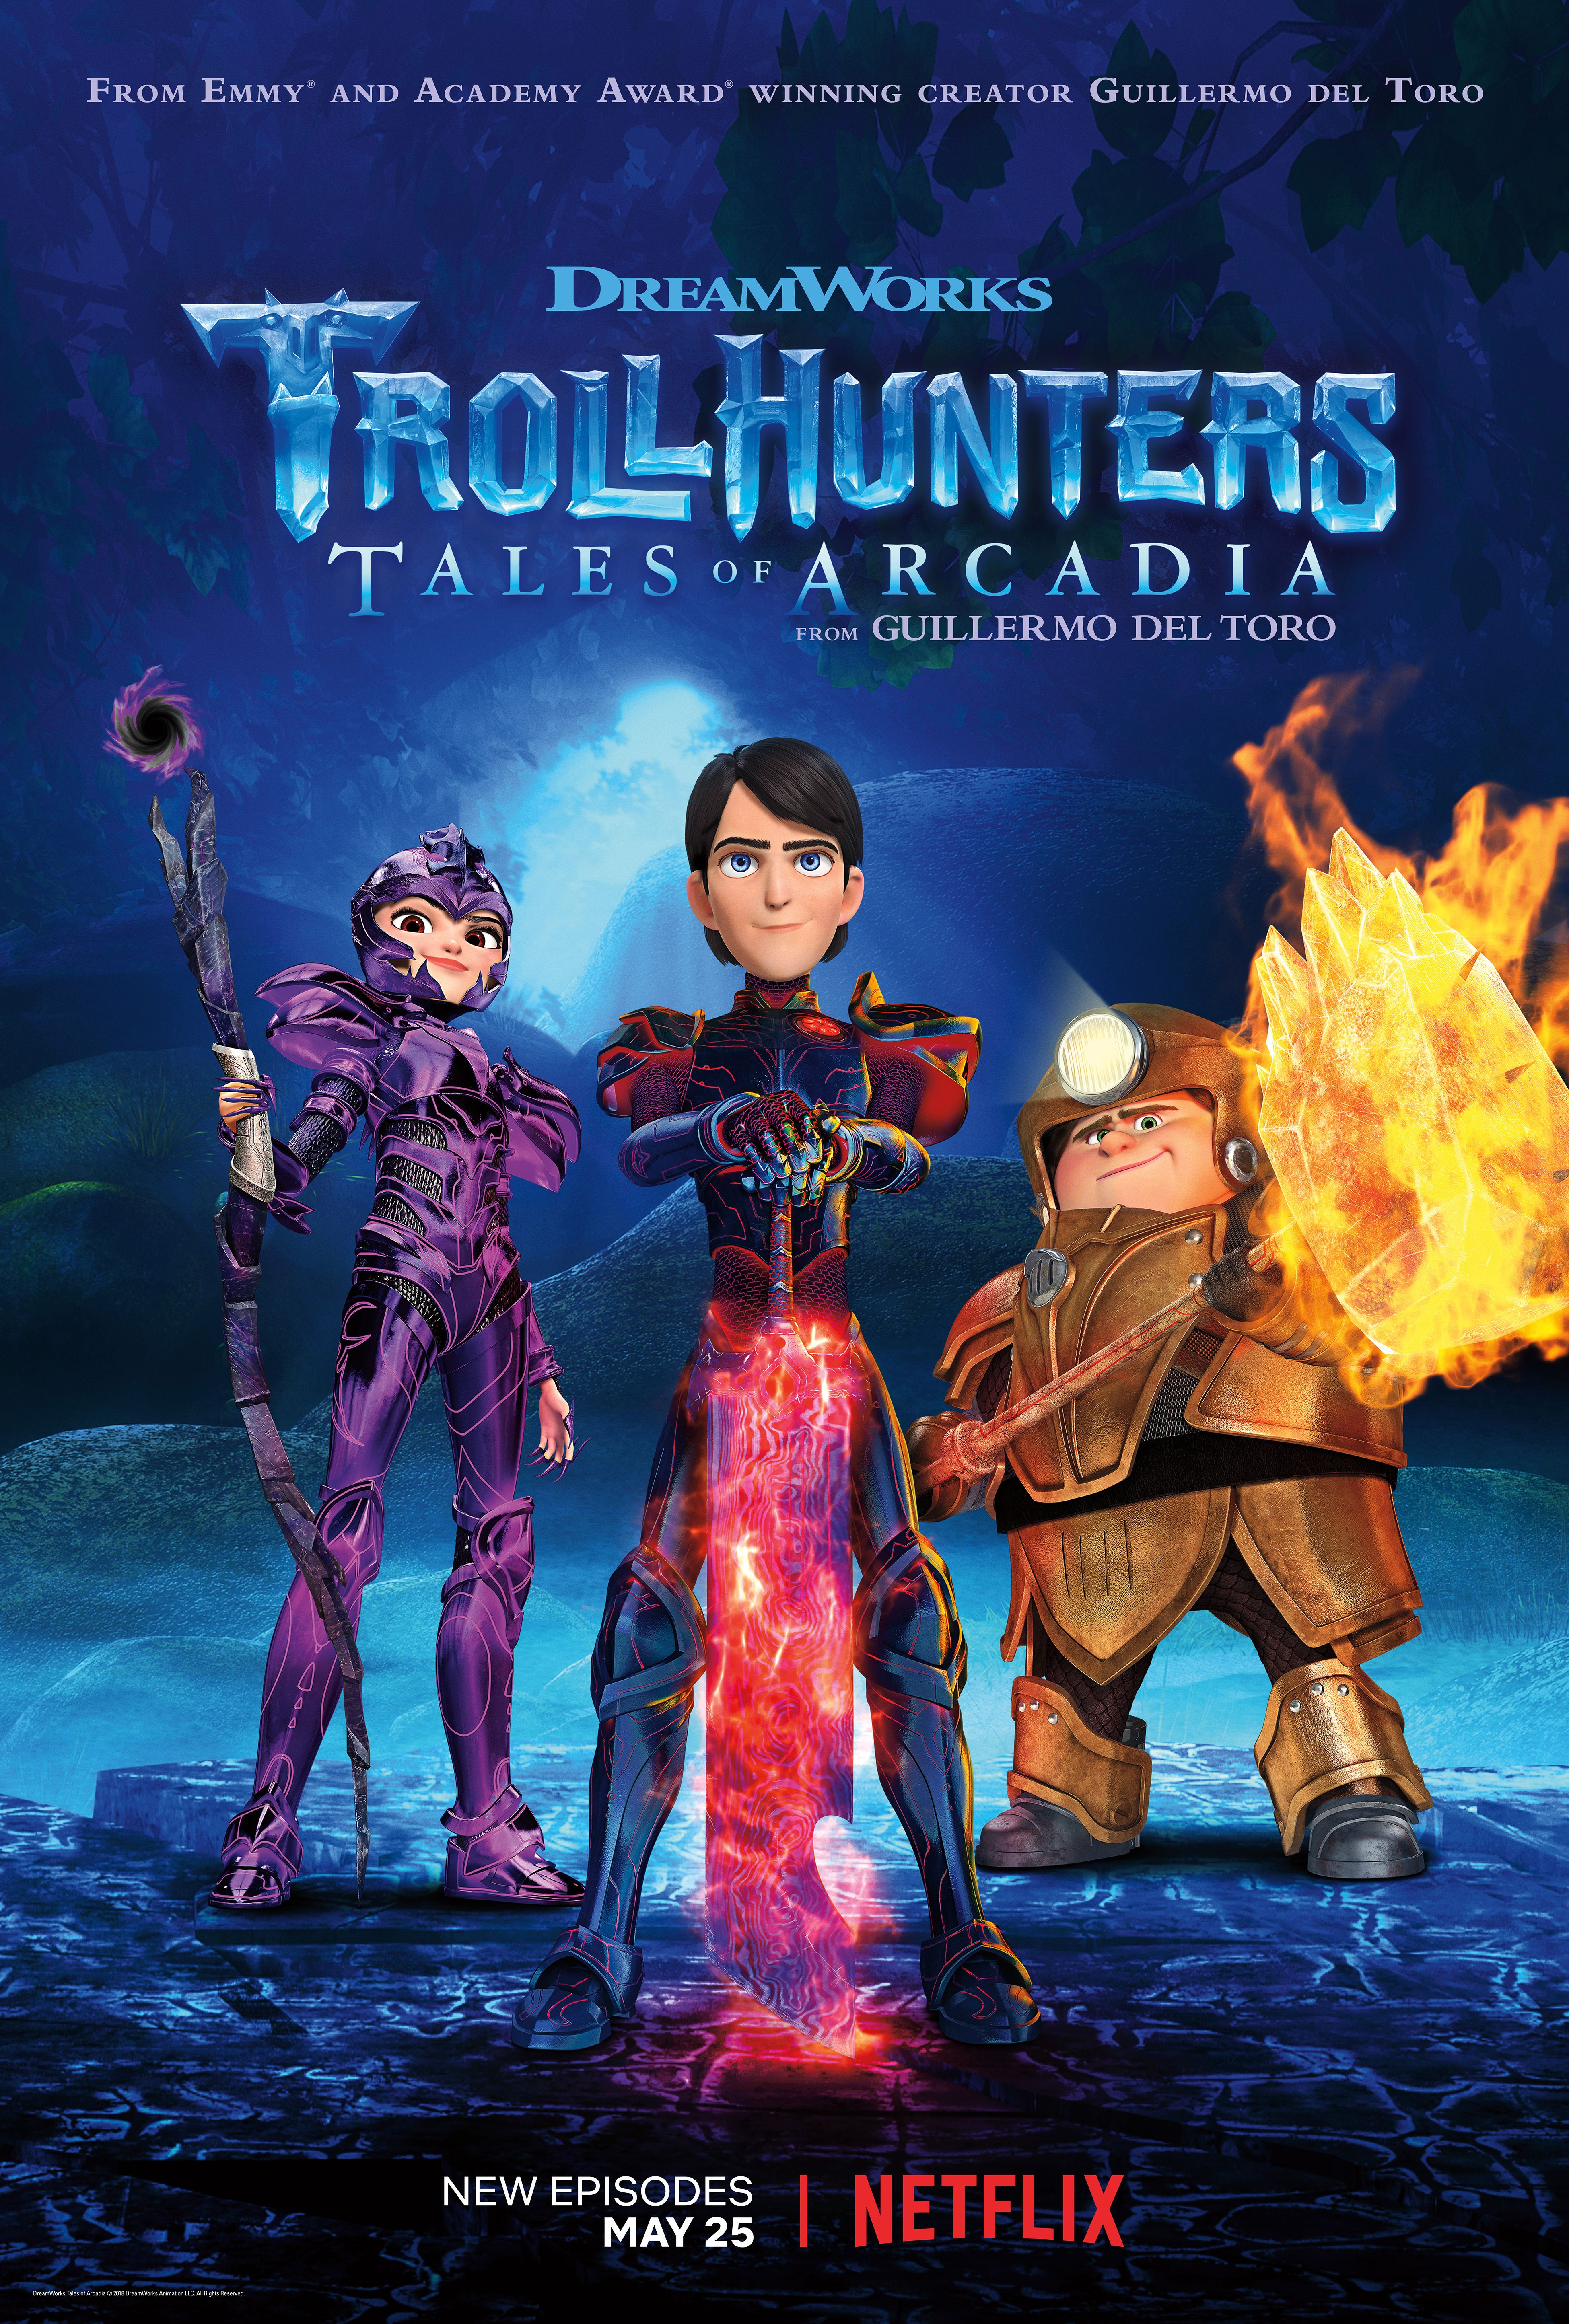 Trollhunters Tales of Arcadia Netflix Poster